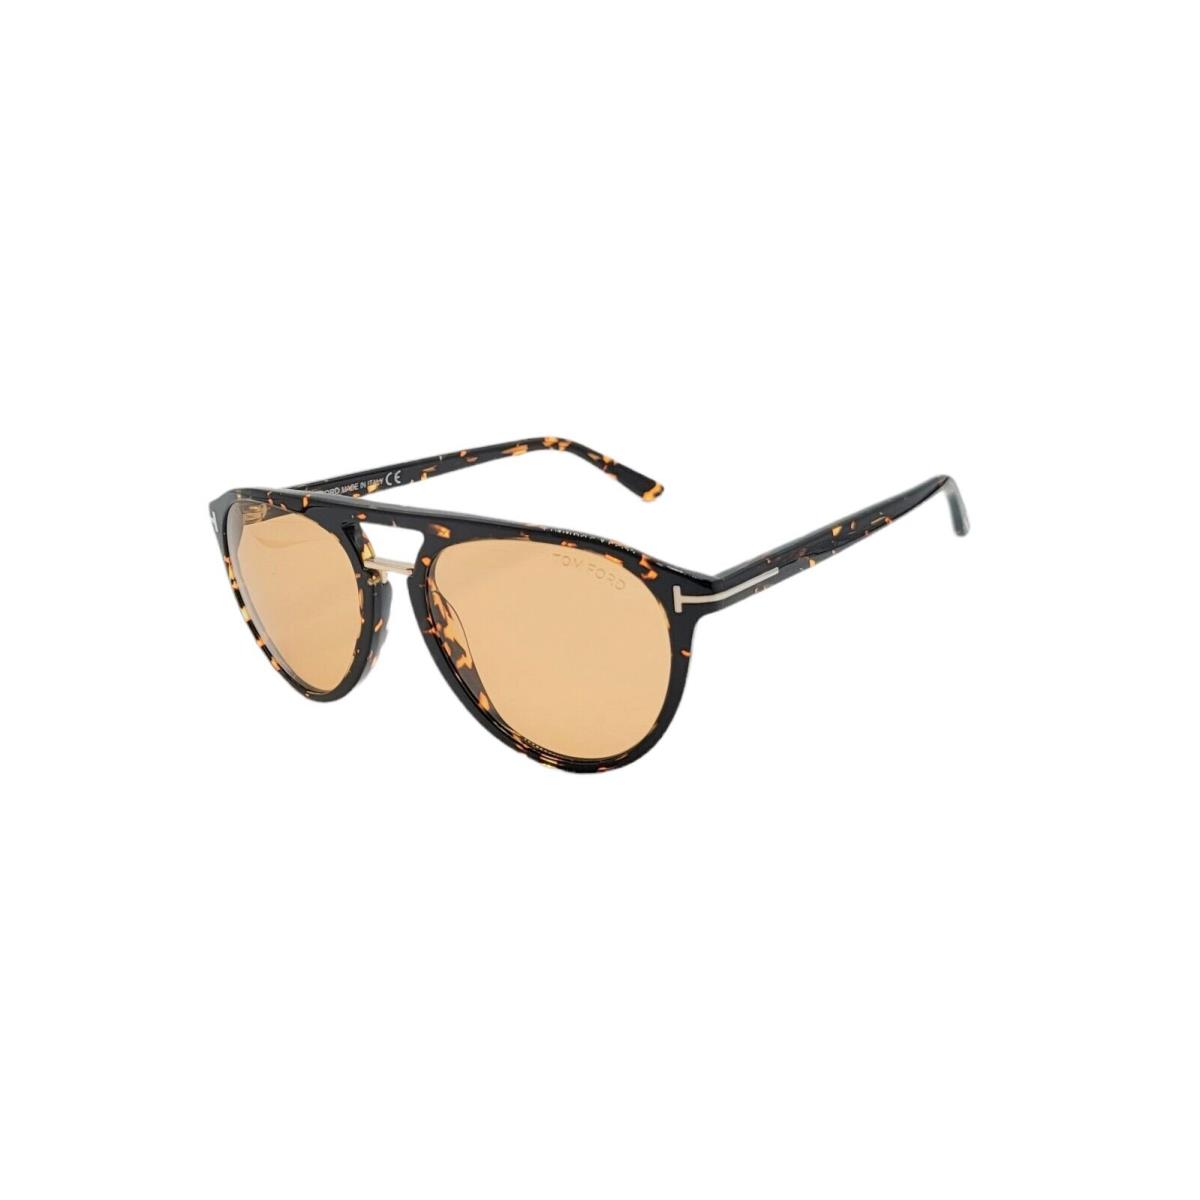 Tom Ford 0697 Burton Sunglasses 52F Spotted Havana / Amber Lenses Size 56 - Frame: Spotted Havana, Lens: Amber